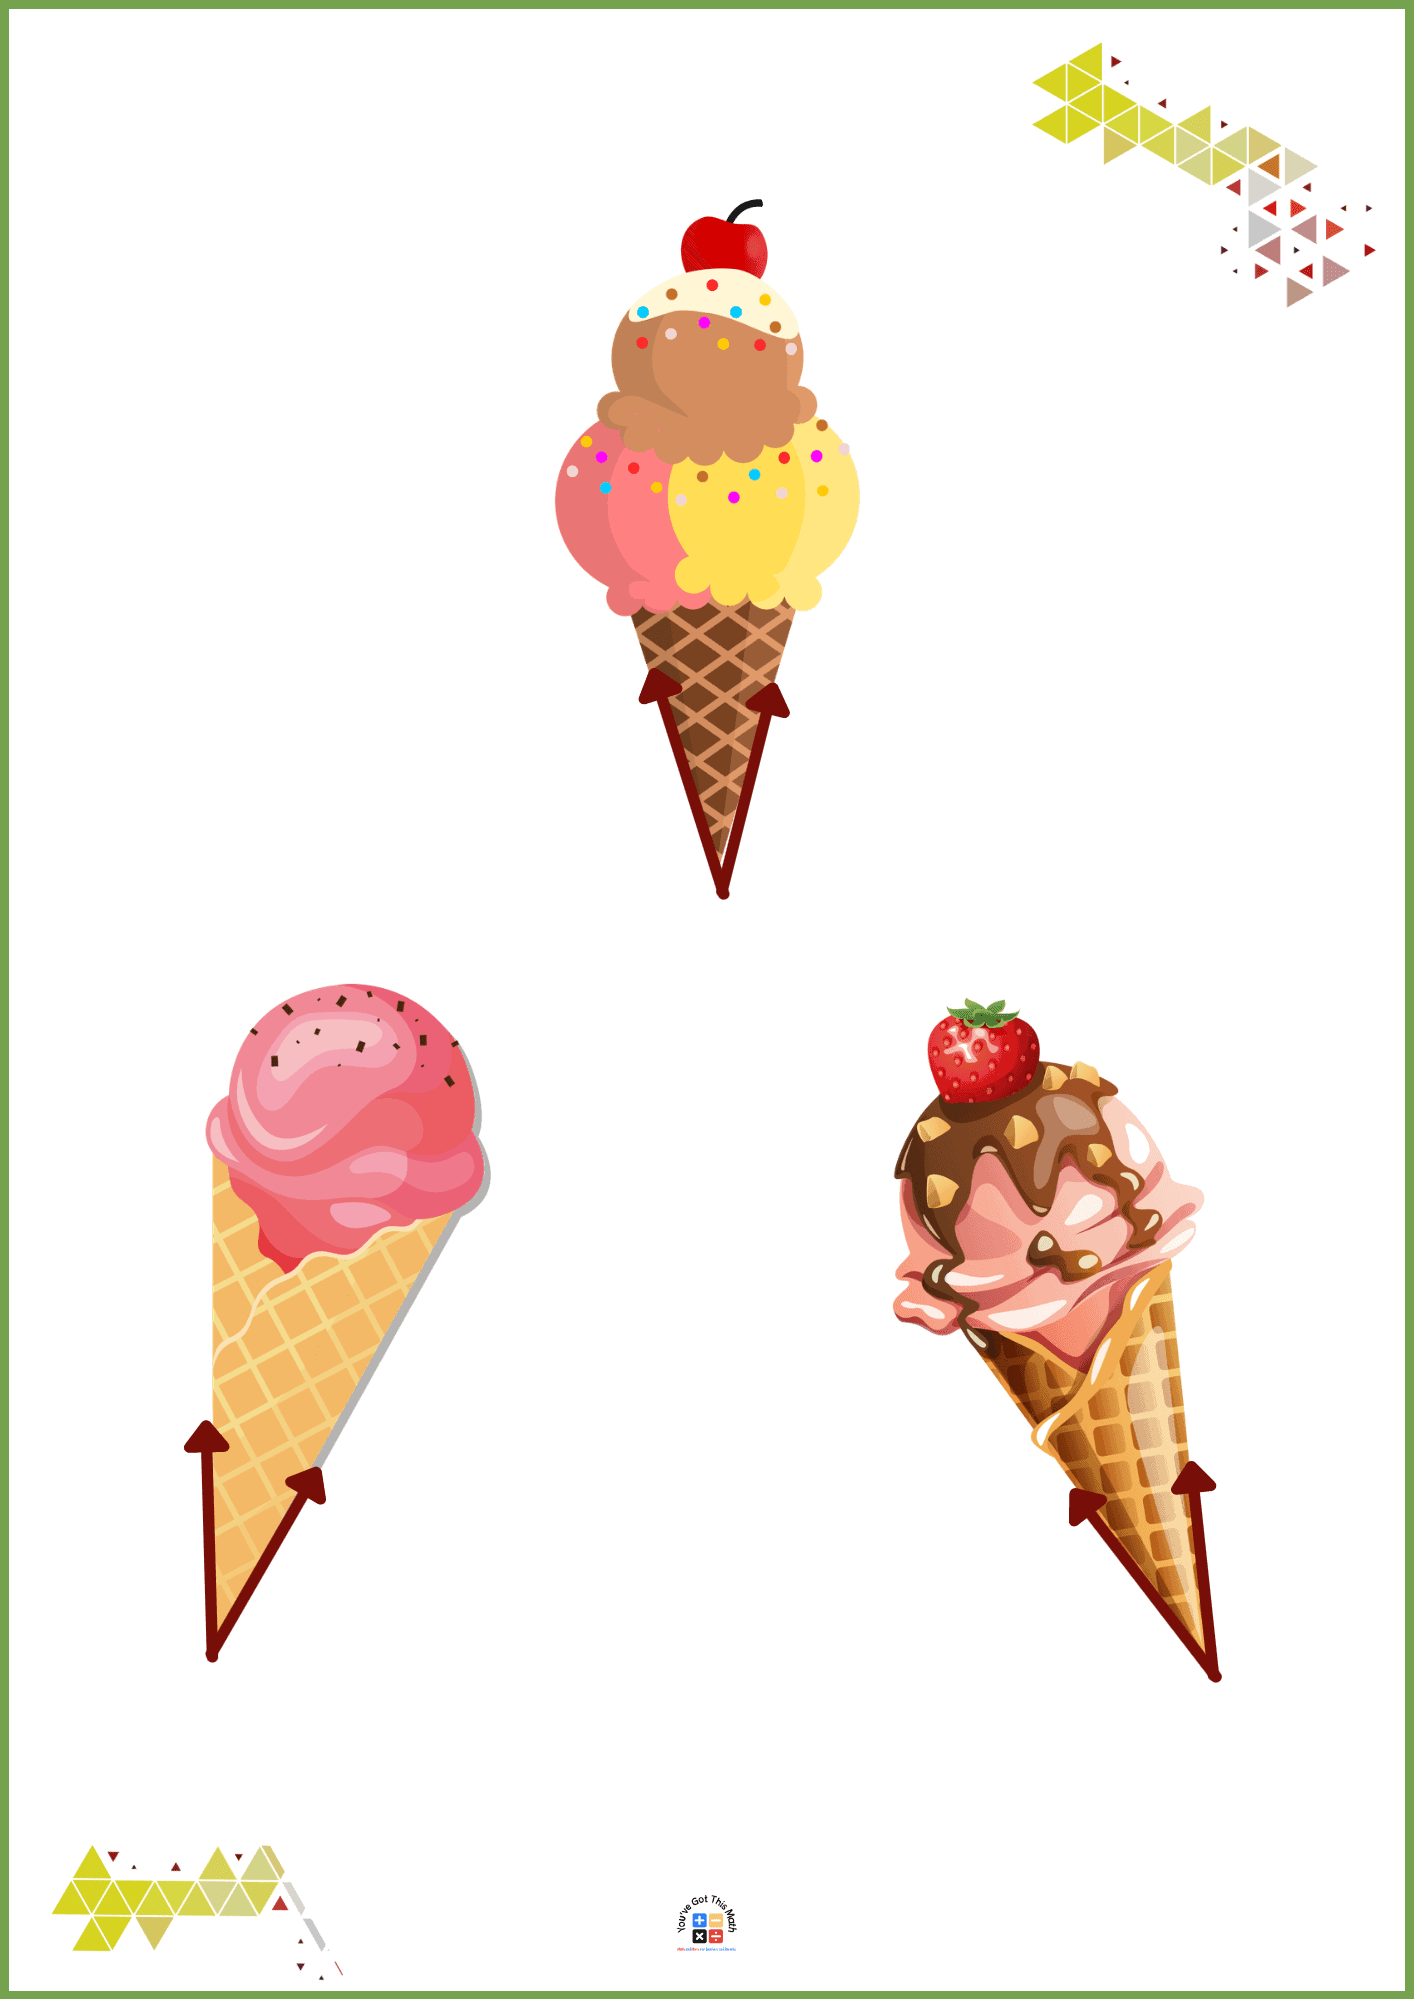 Ice Cream Cone with Acute Angle